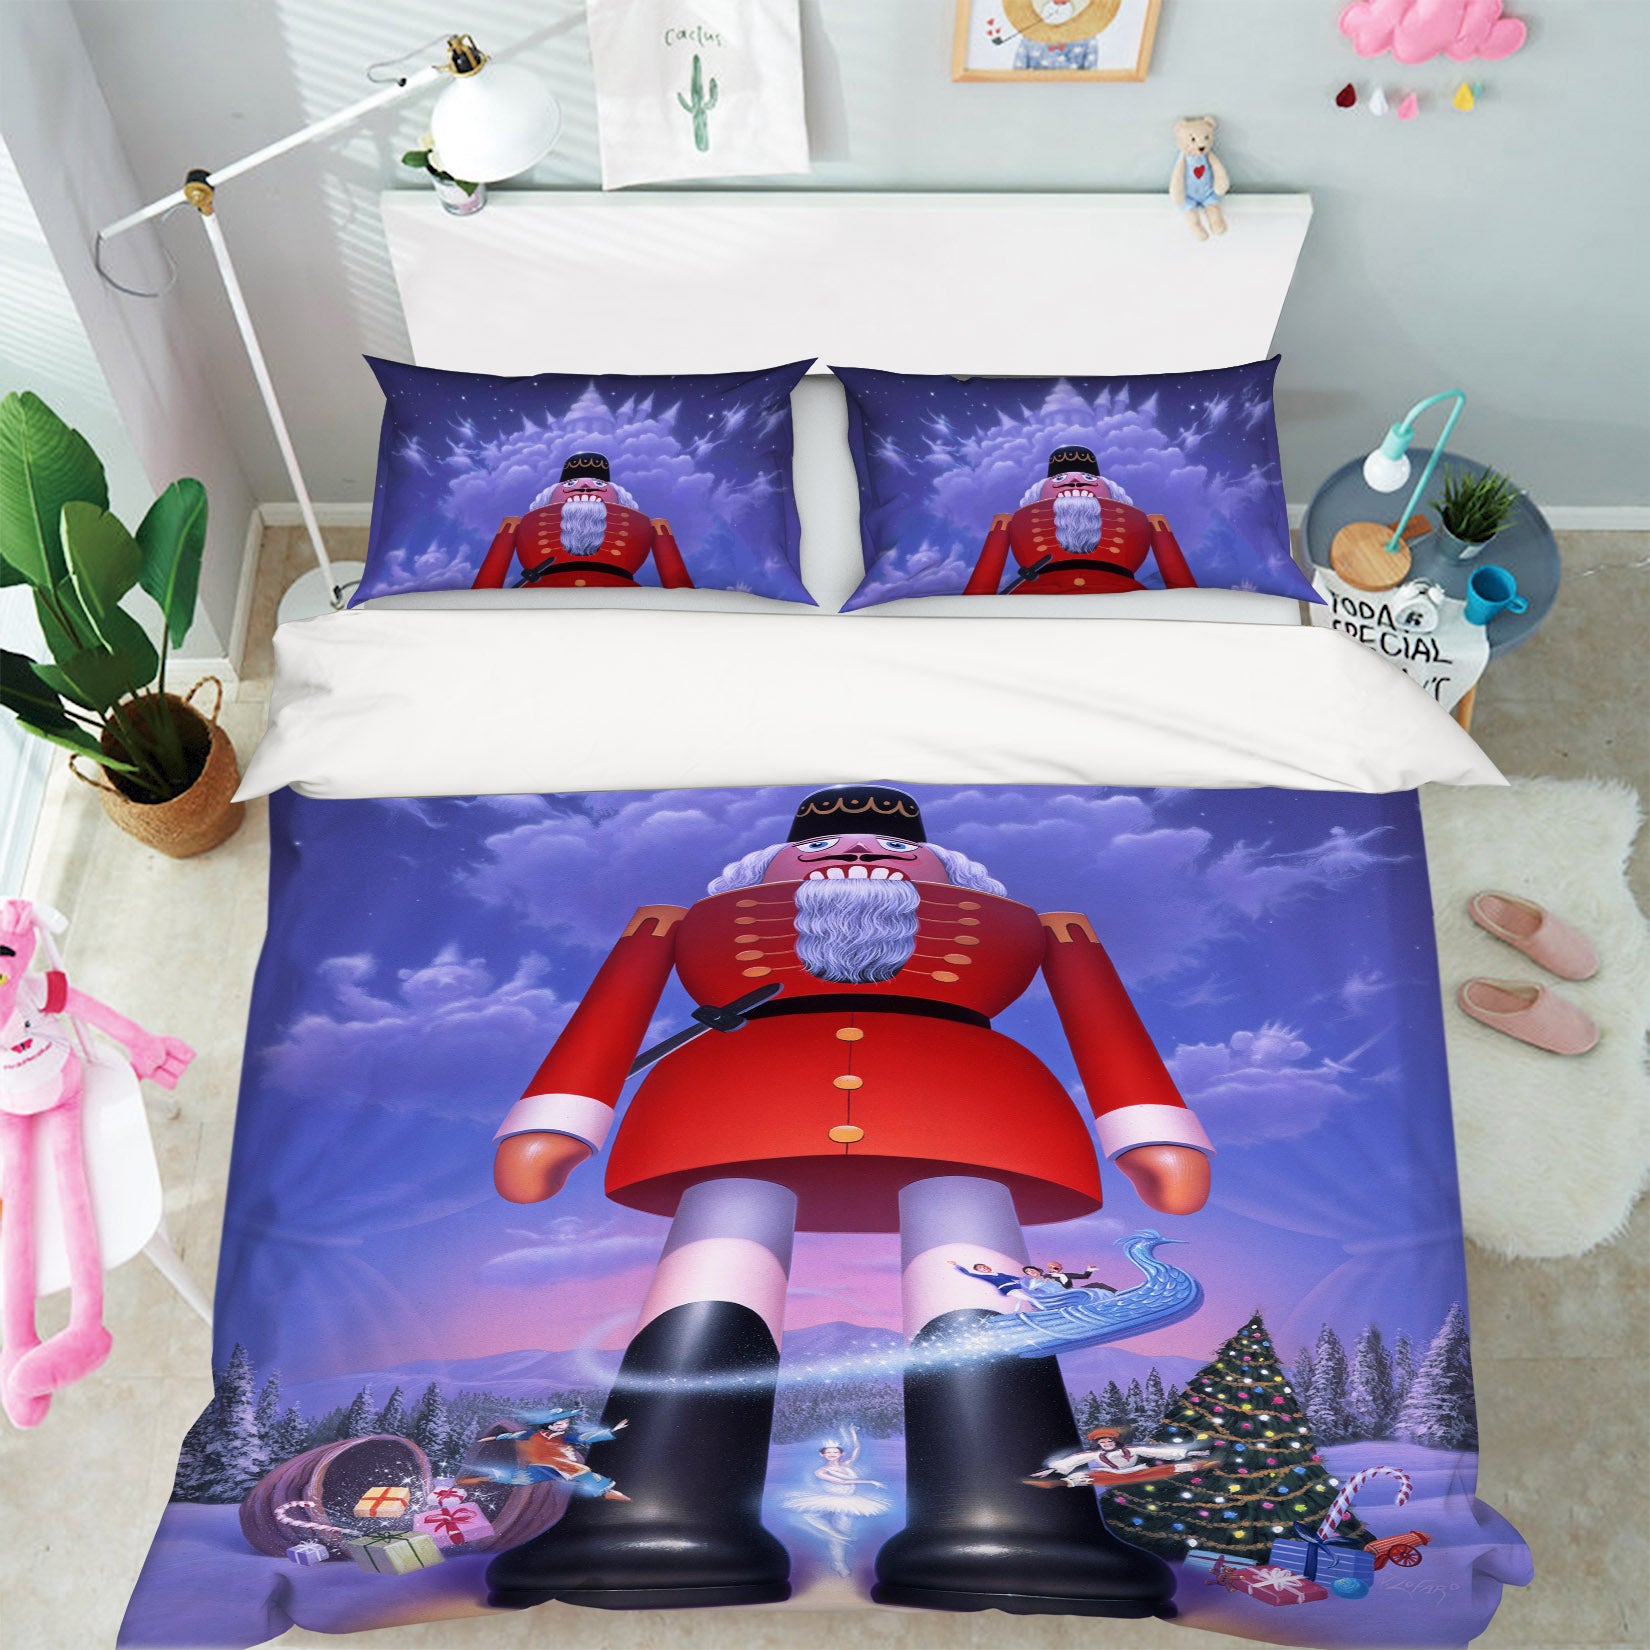 3D Nutcracker 86034 Jerry LoFaro bedding Bed Pillowcases Quilt